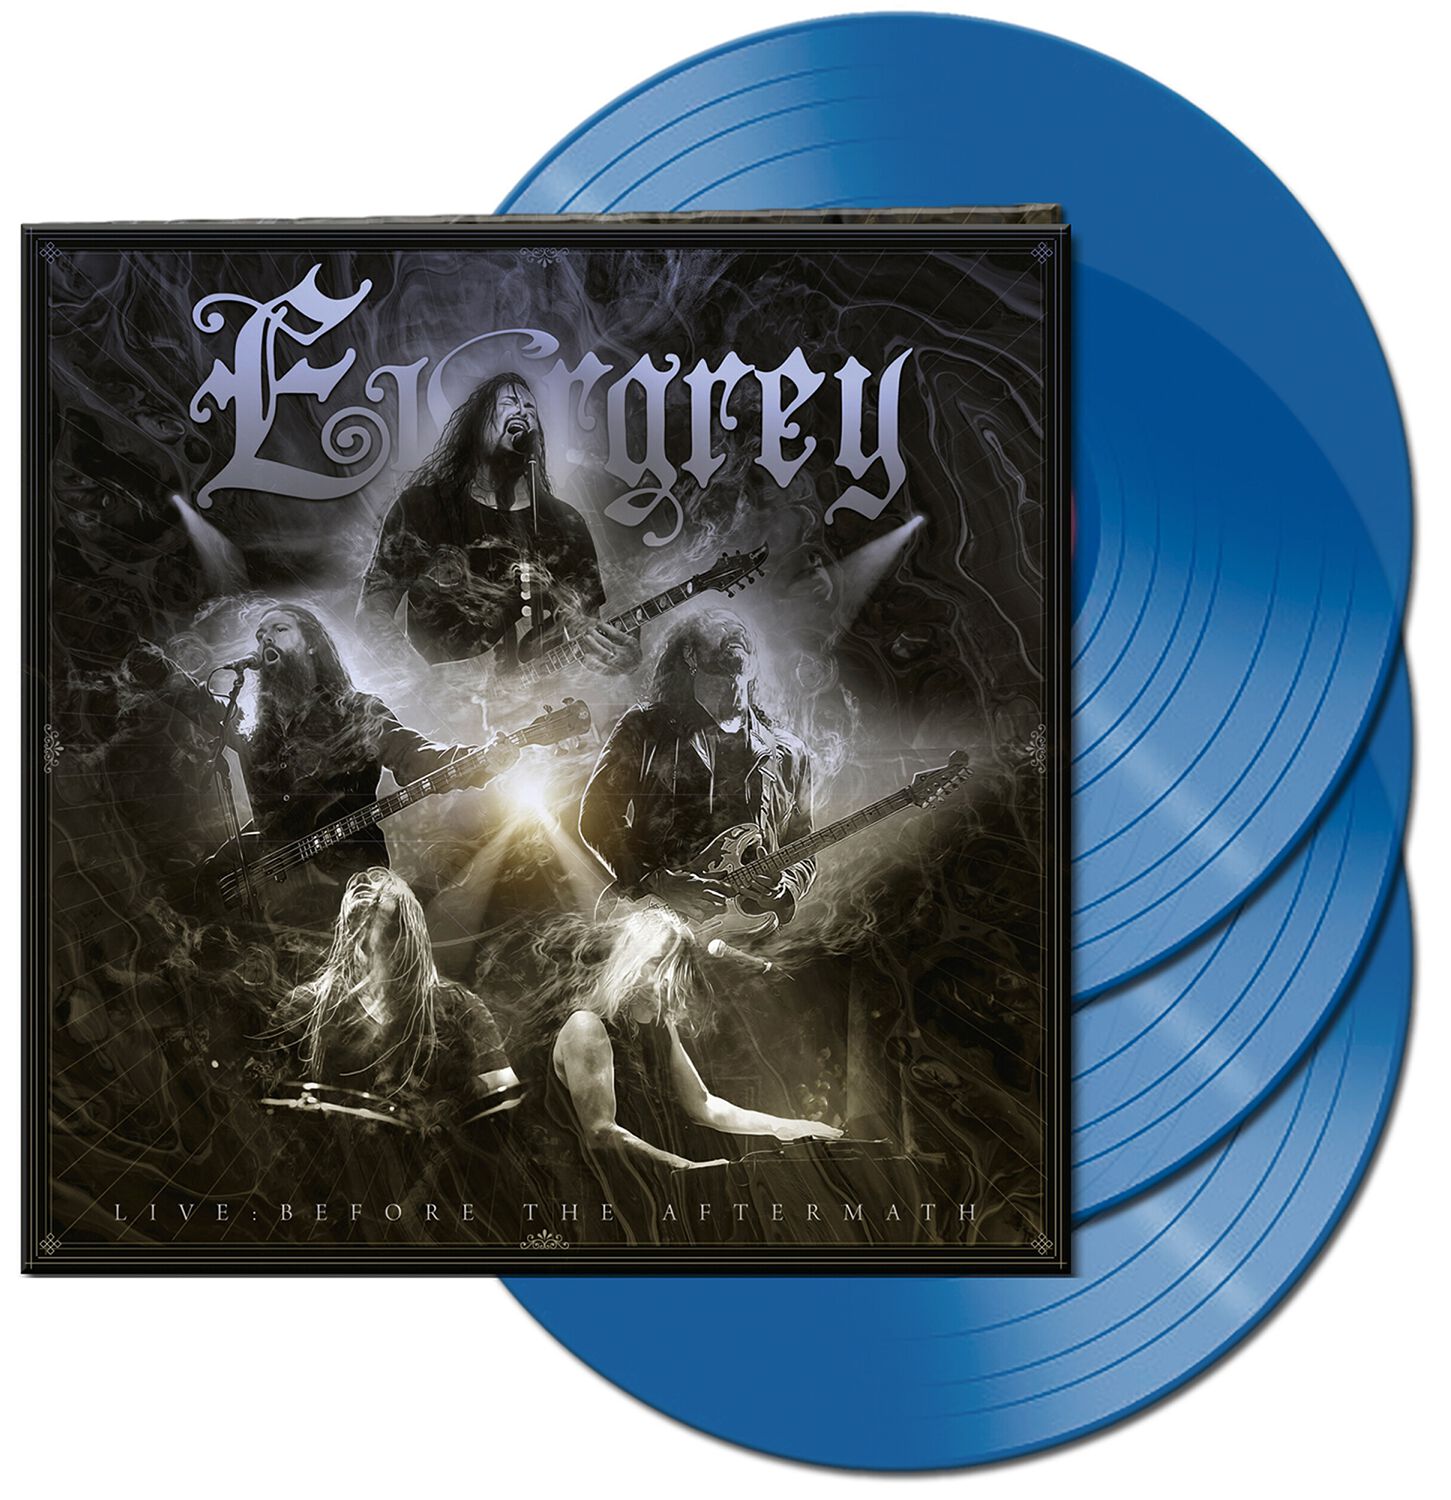 Levně Evergrey Before the aftermath (Live in Gothenburg) 3-LP barevný